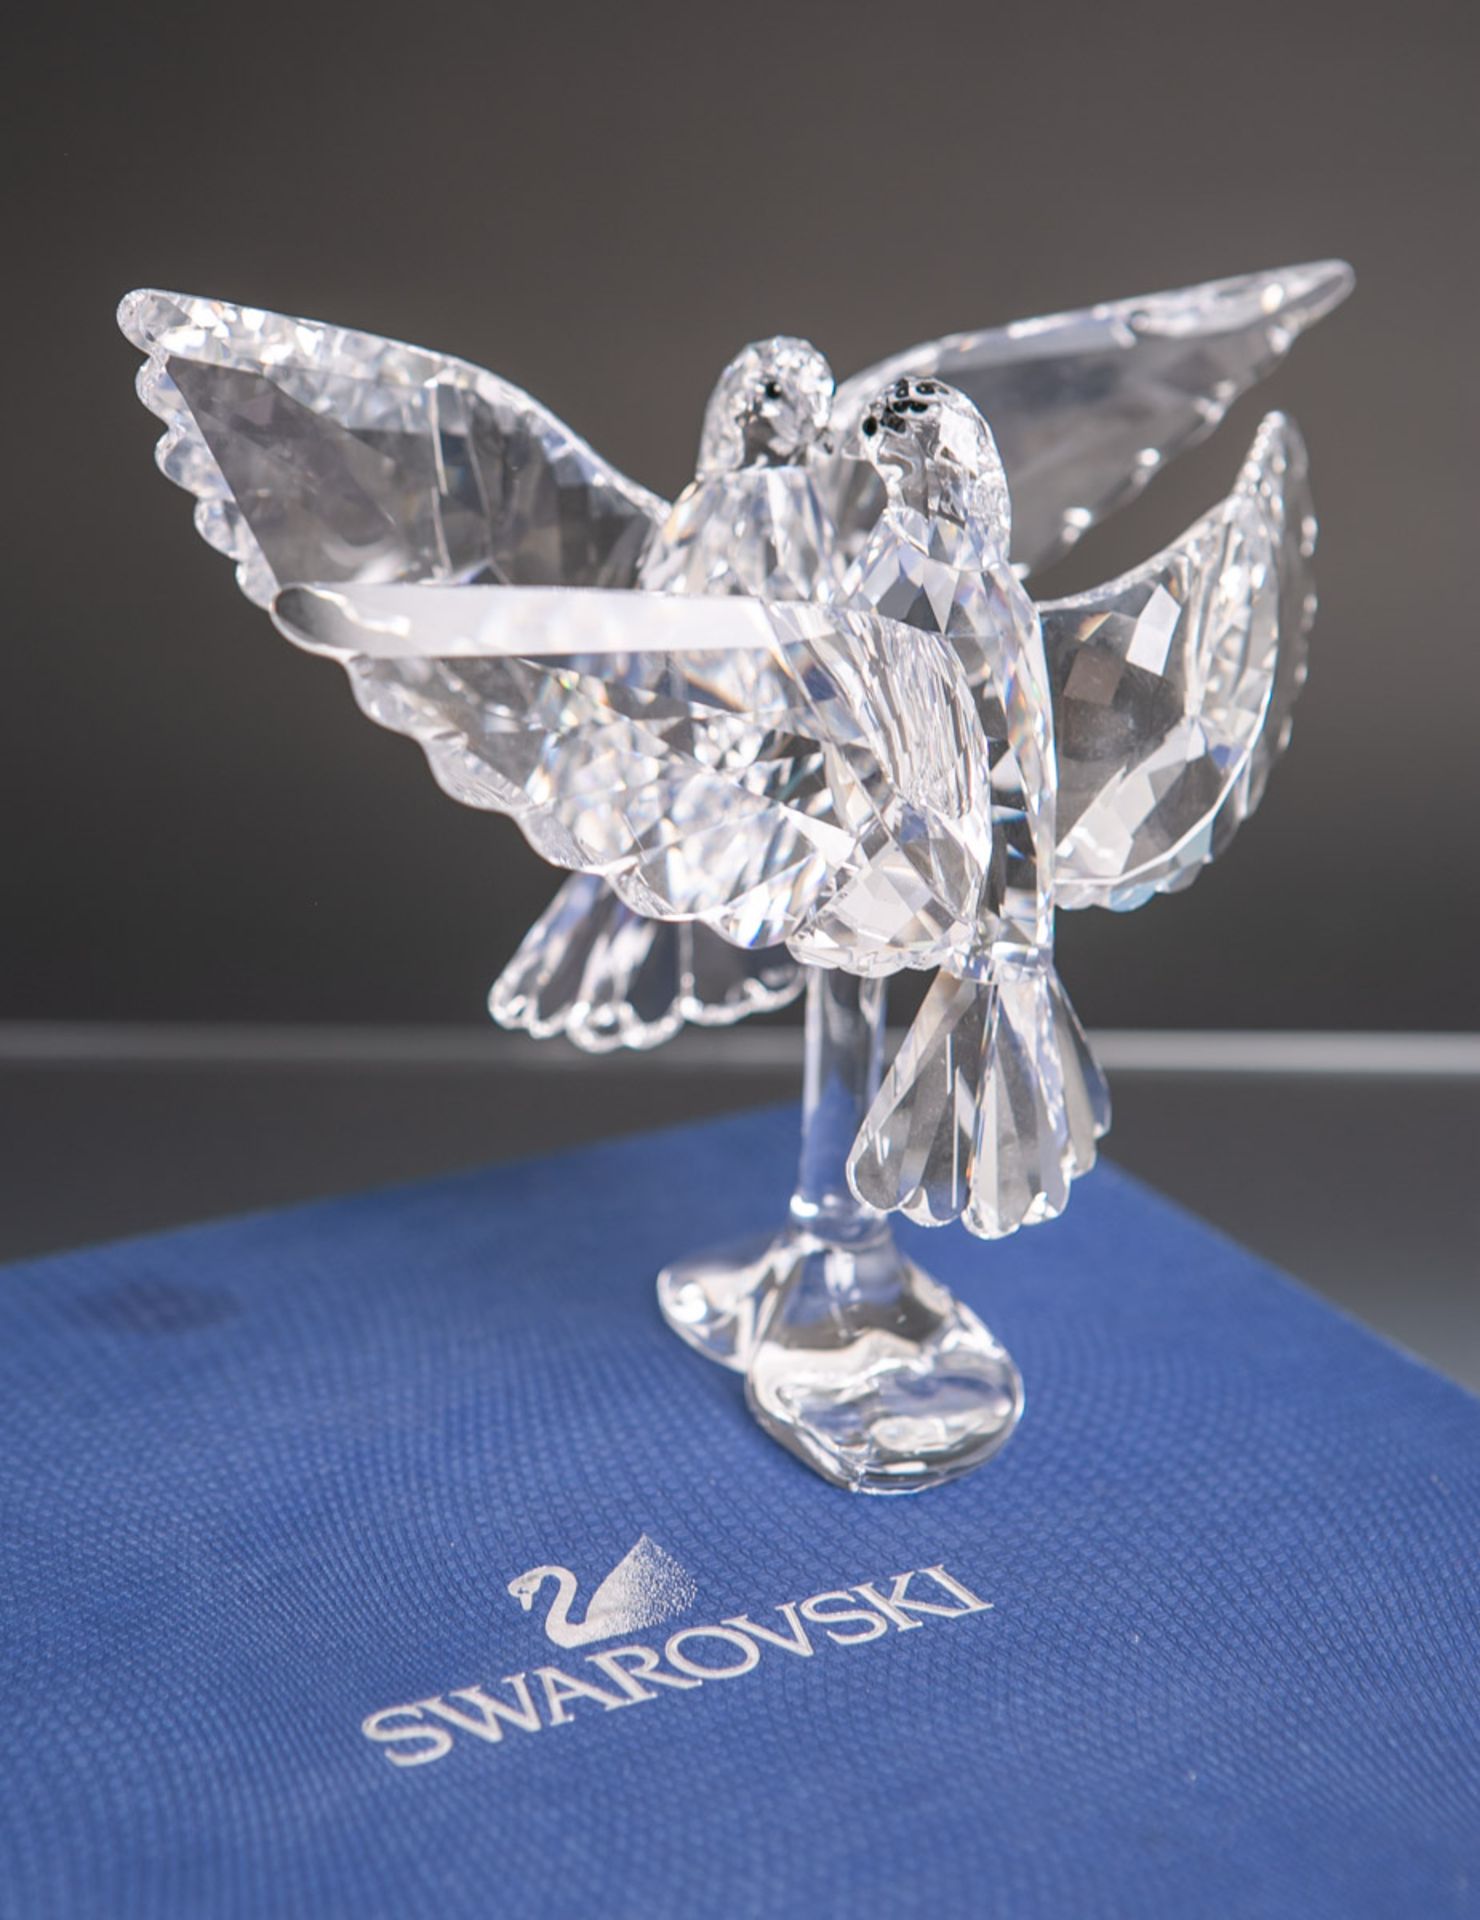 Swarovski-Glasvögel, Figurengruppe aus facetiertem Kristallglas, kl. Herstellerplakette,